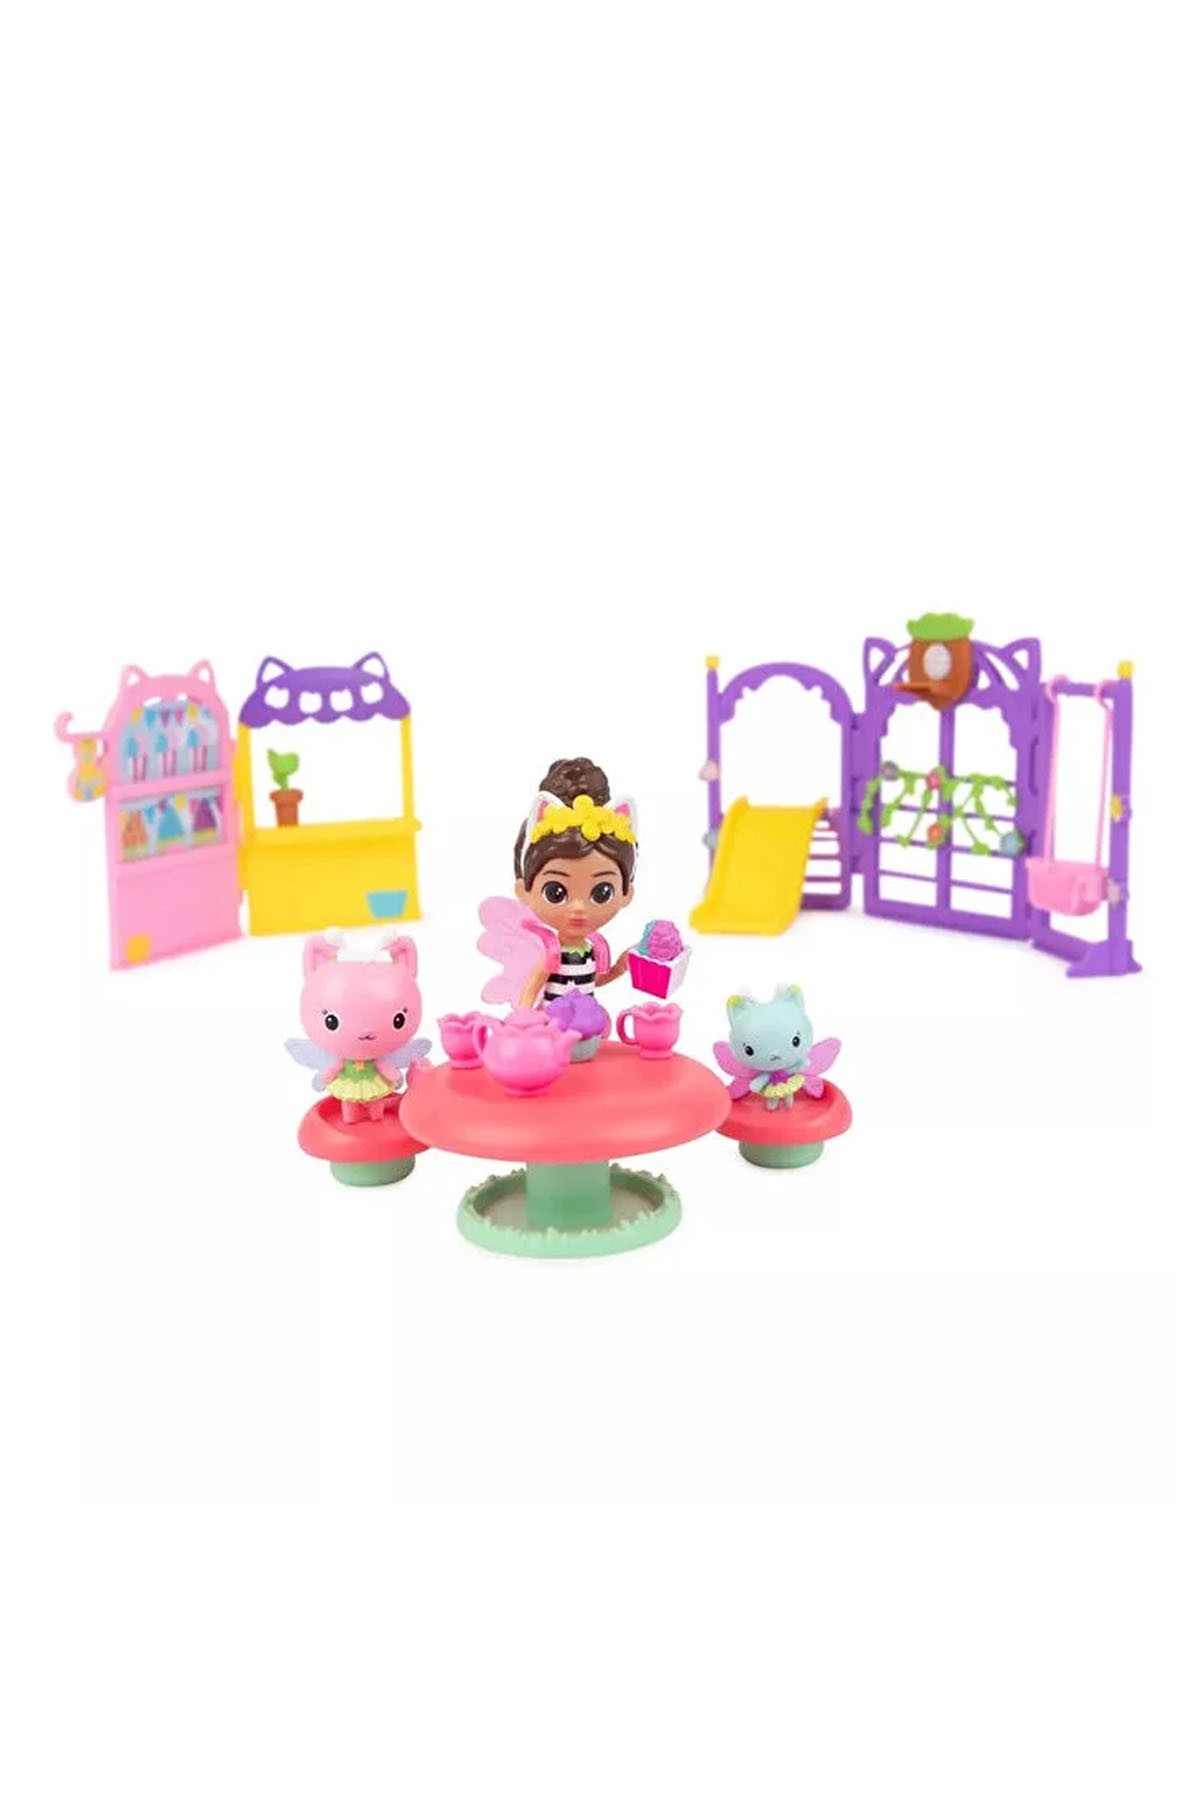 Gabby's Dollhouse Peri Oyun Seti 6065911